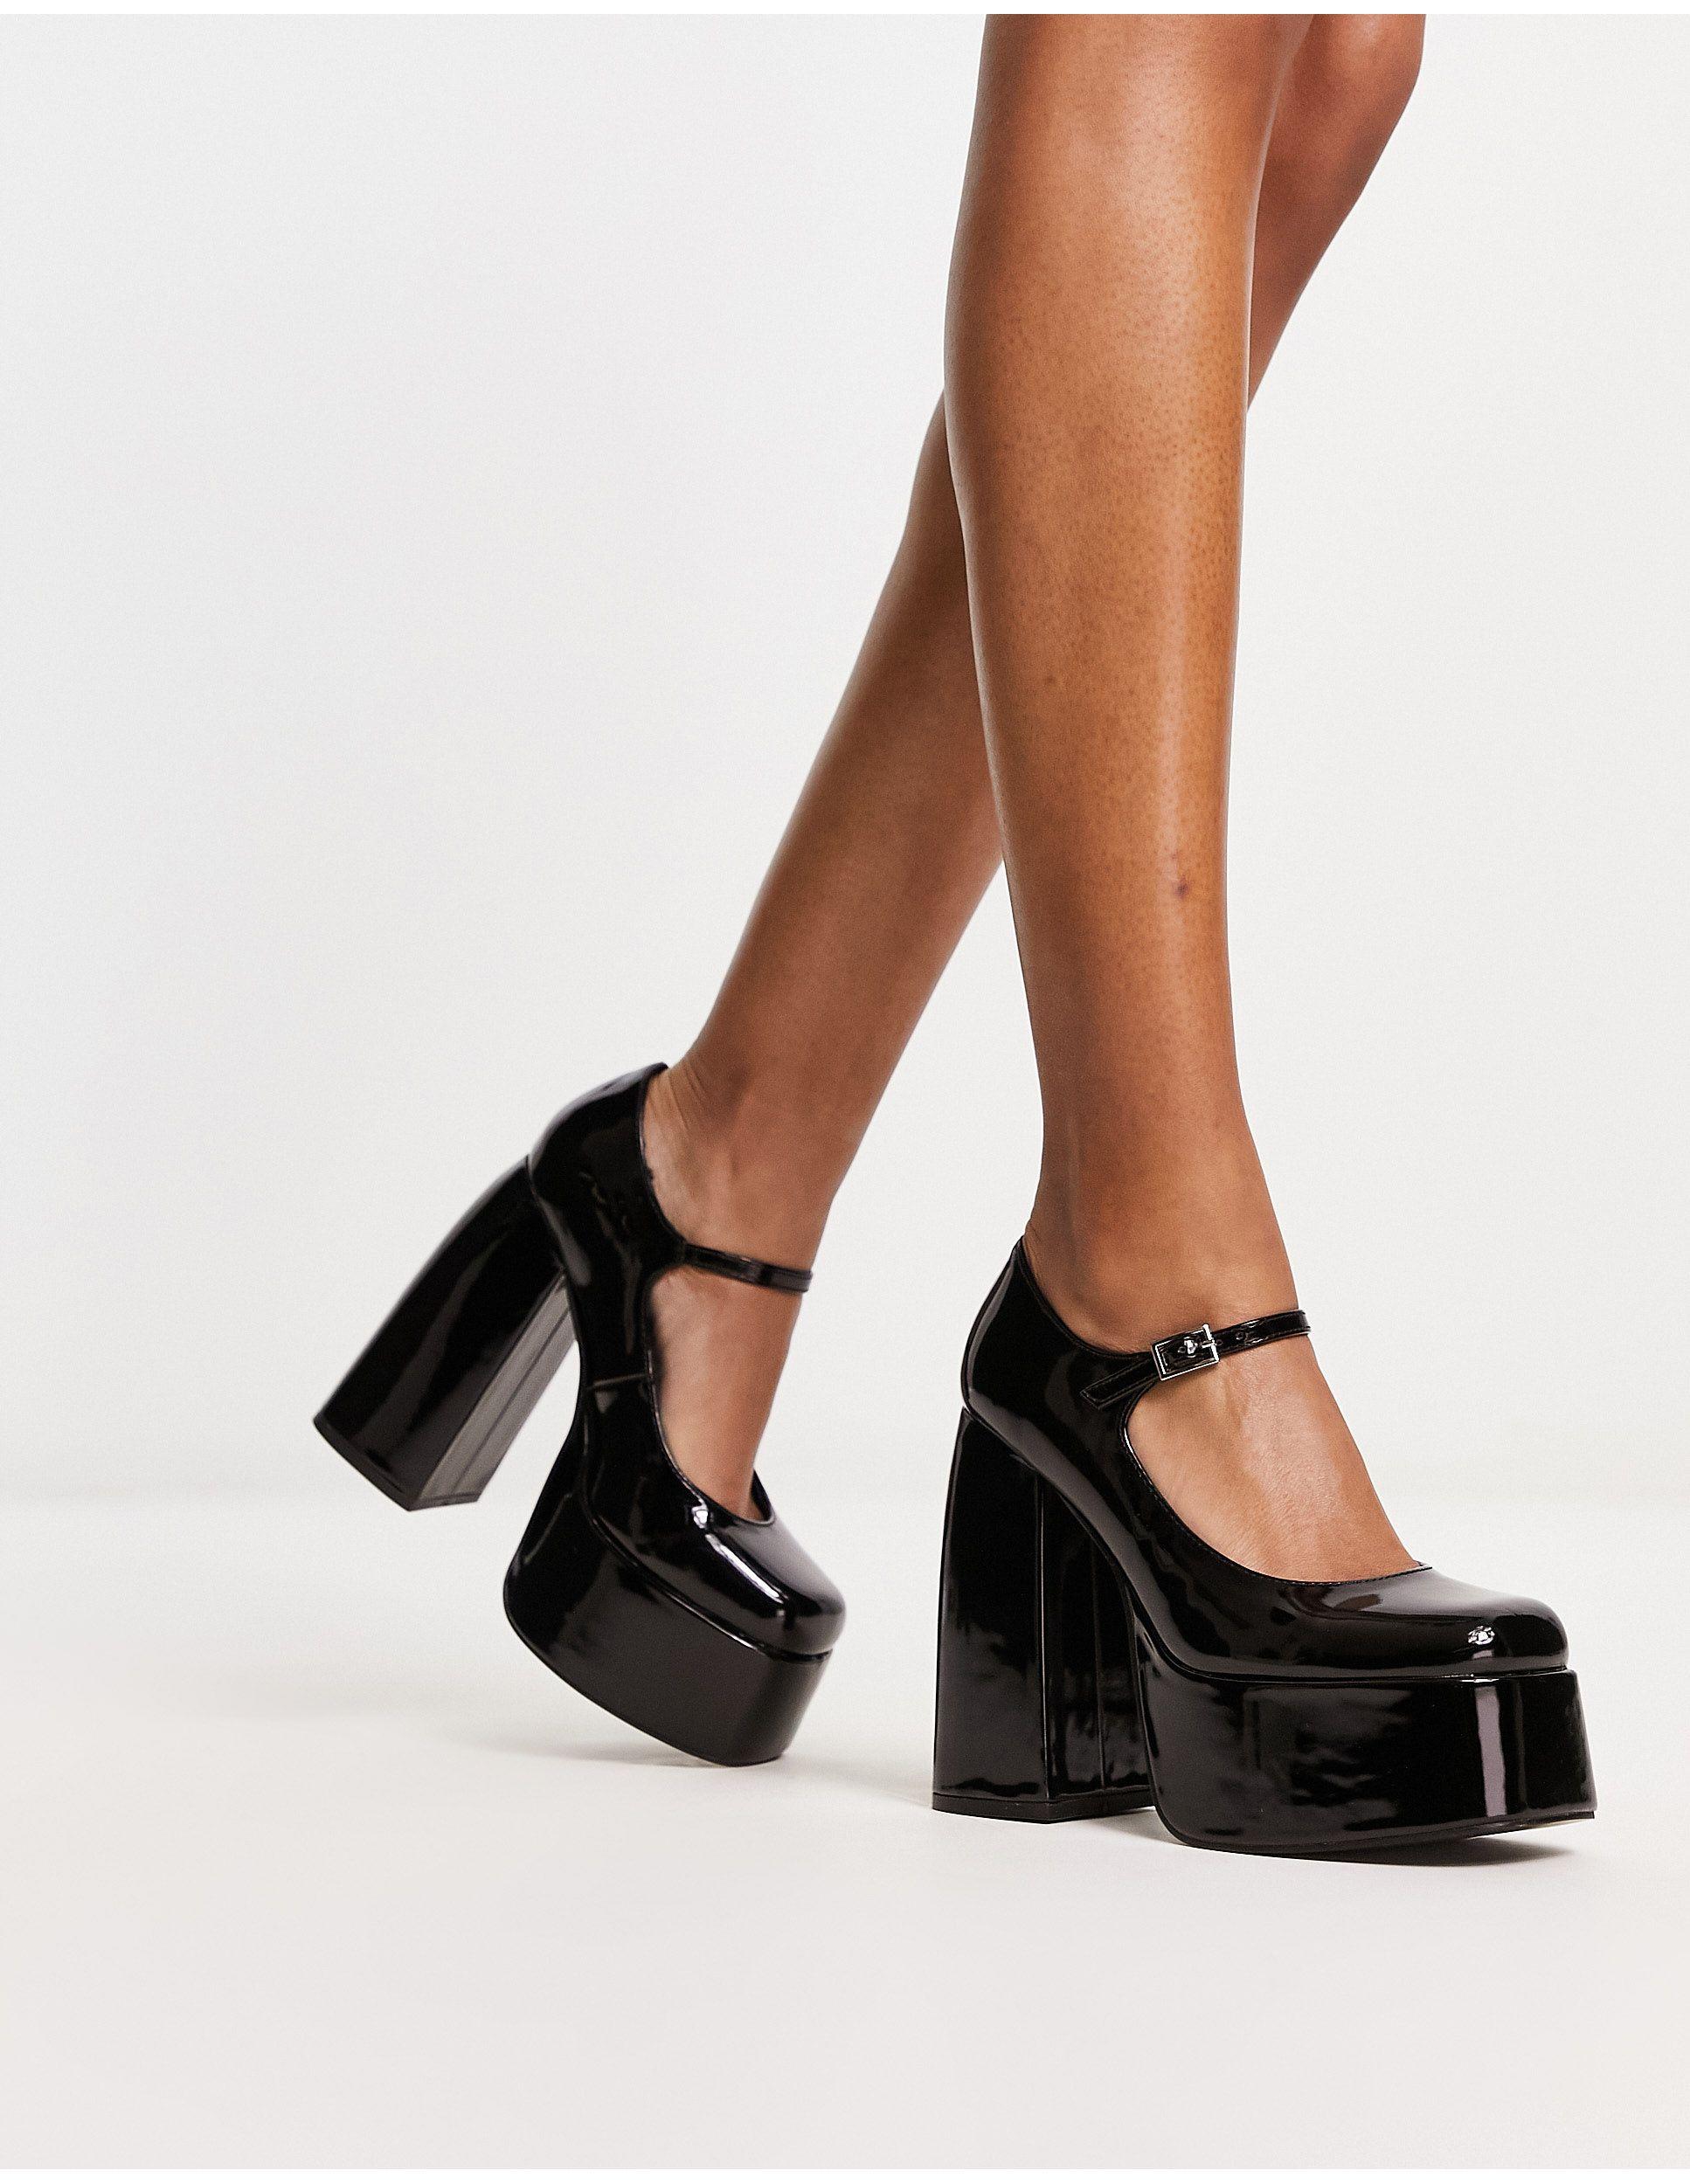 Koi Footwear Koi Mary Jane Platform Heeled Shoes in Black | Lyst